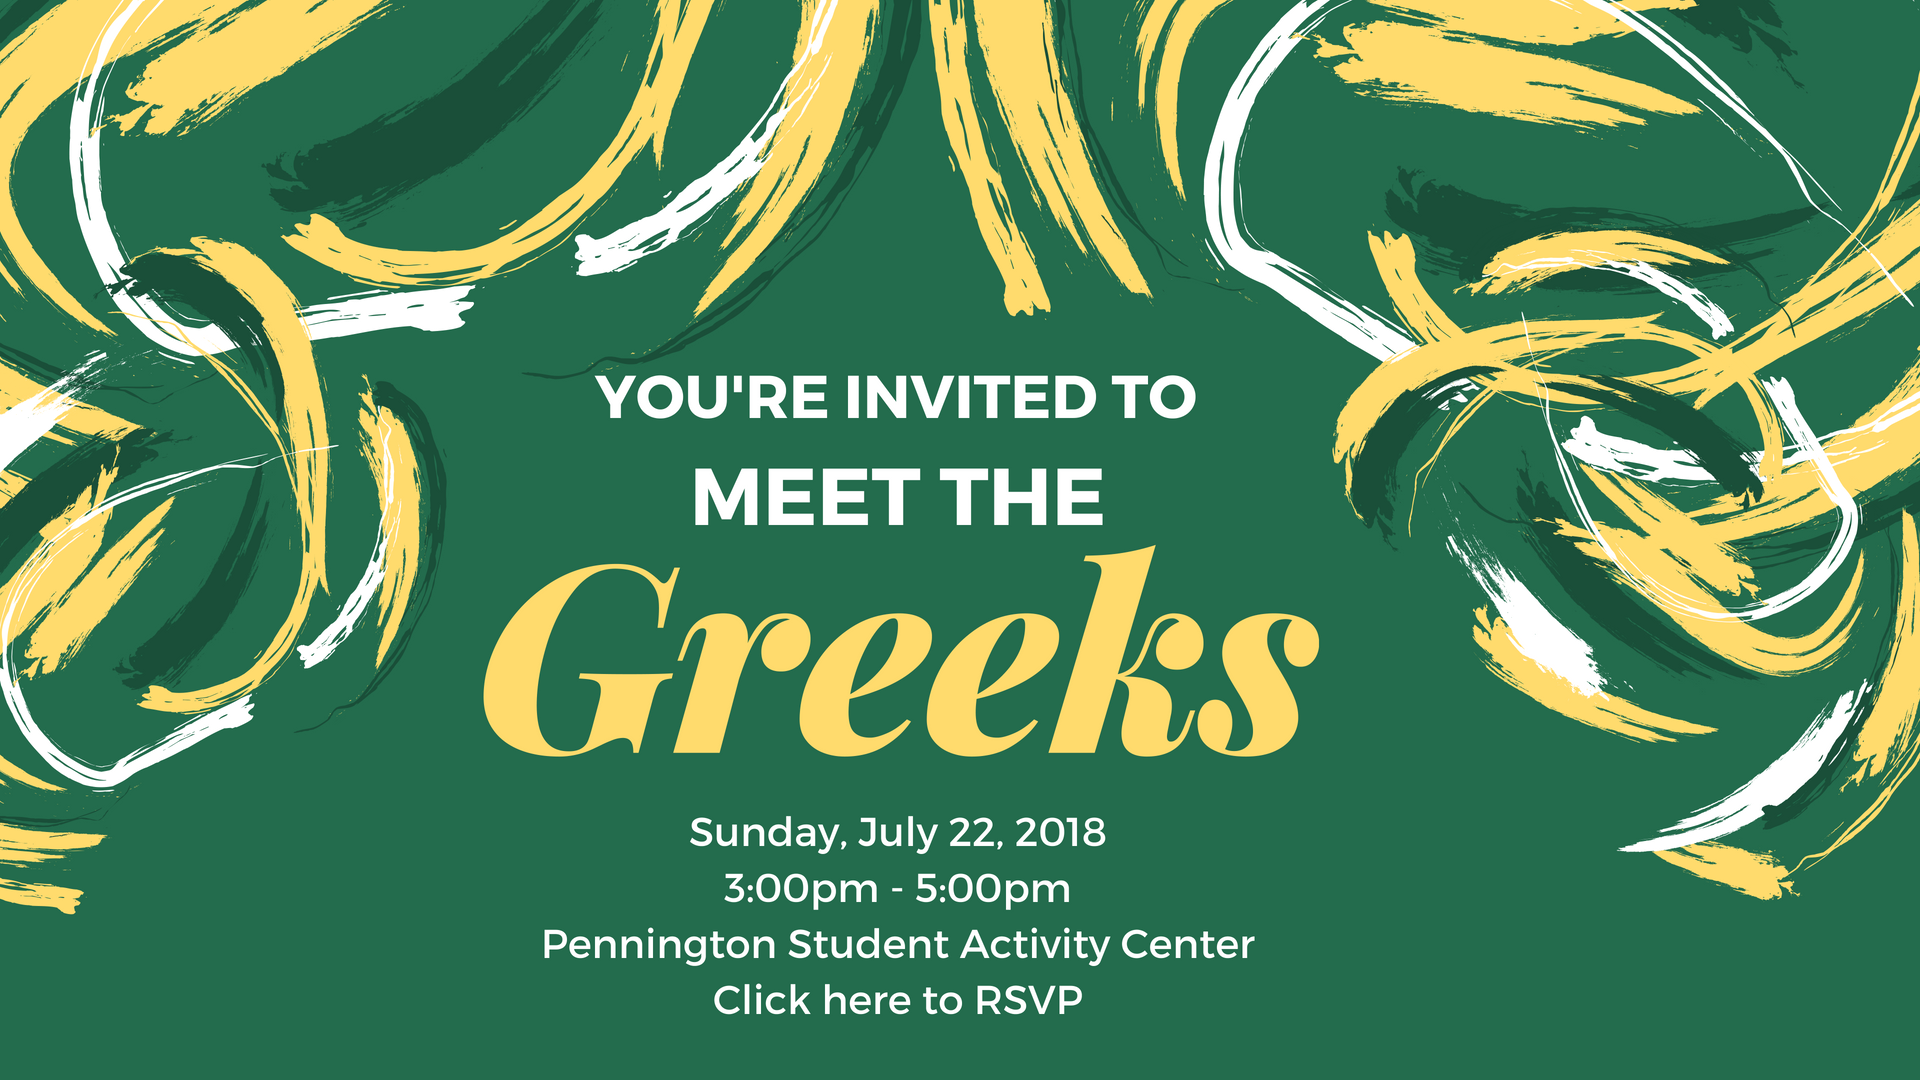 Meet the Greeks